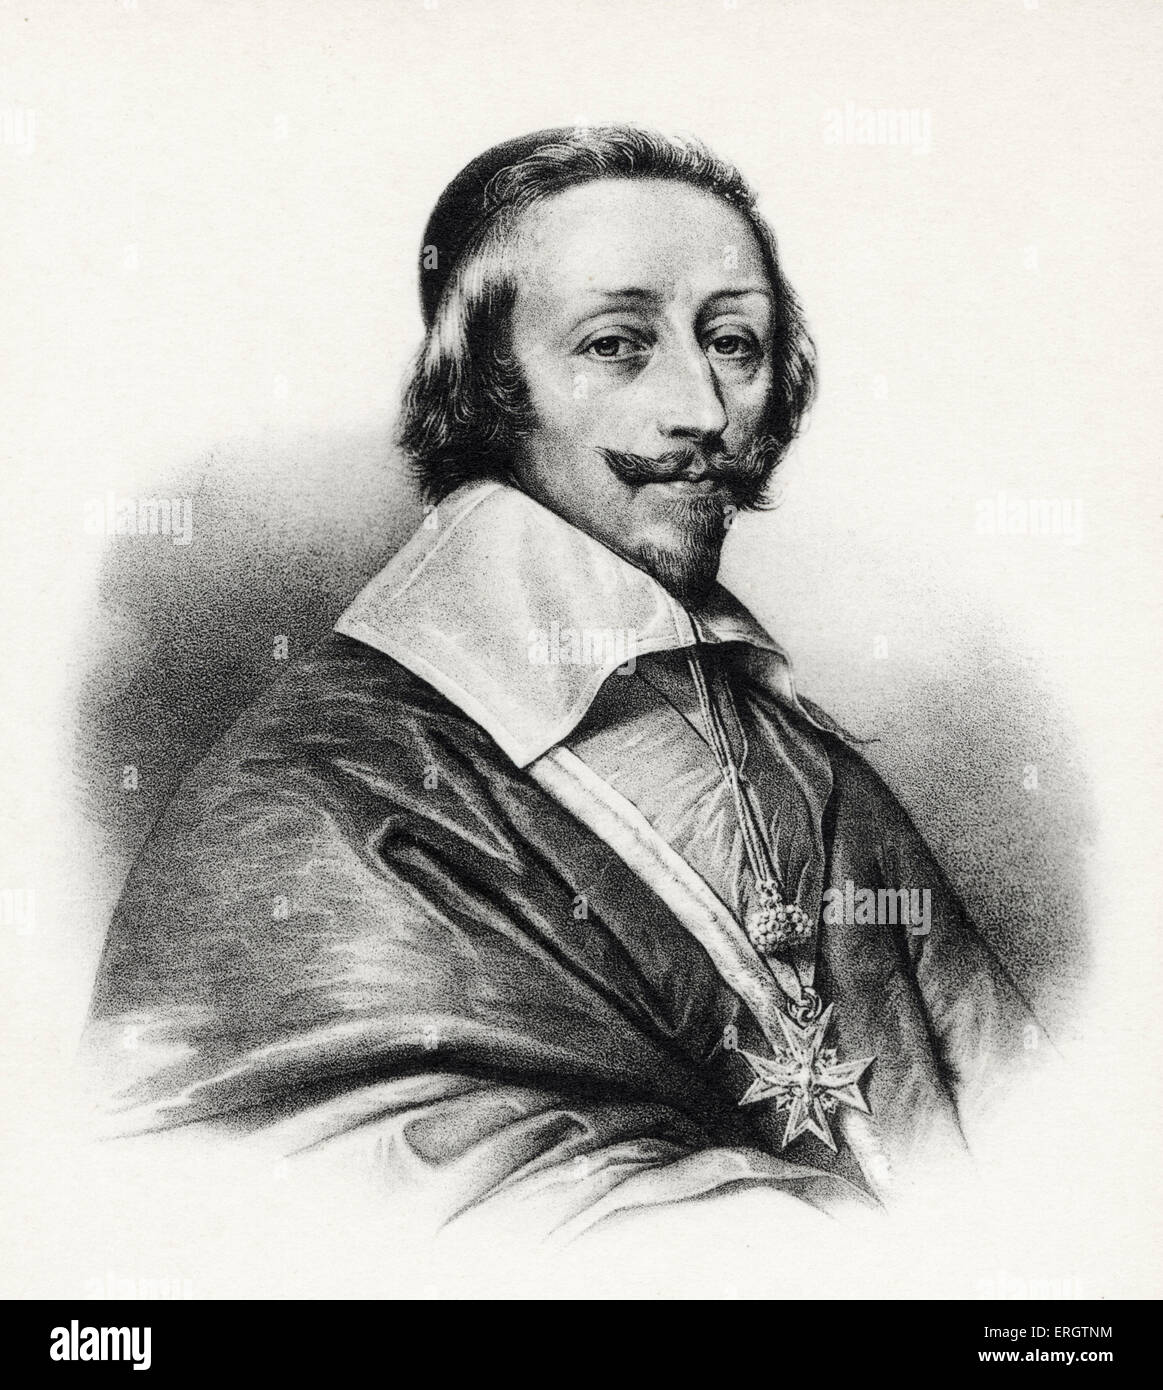 Cardinal Richelieu, Armand-Jean du Plessis. Minister of Louis XIII, (1585-1642). Stock Photo